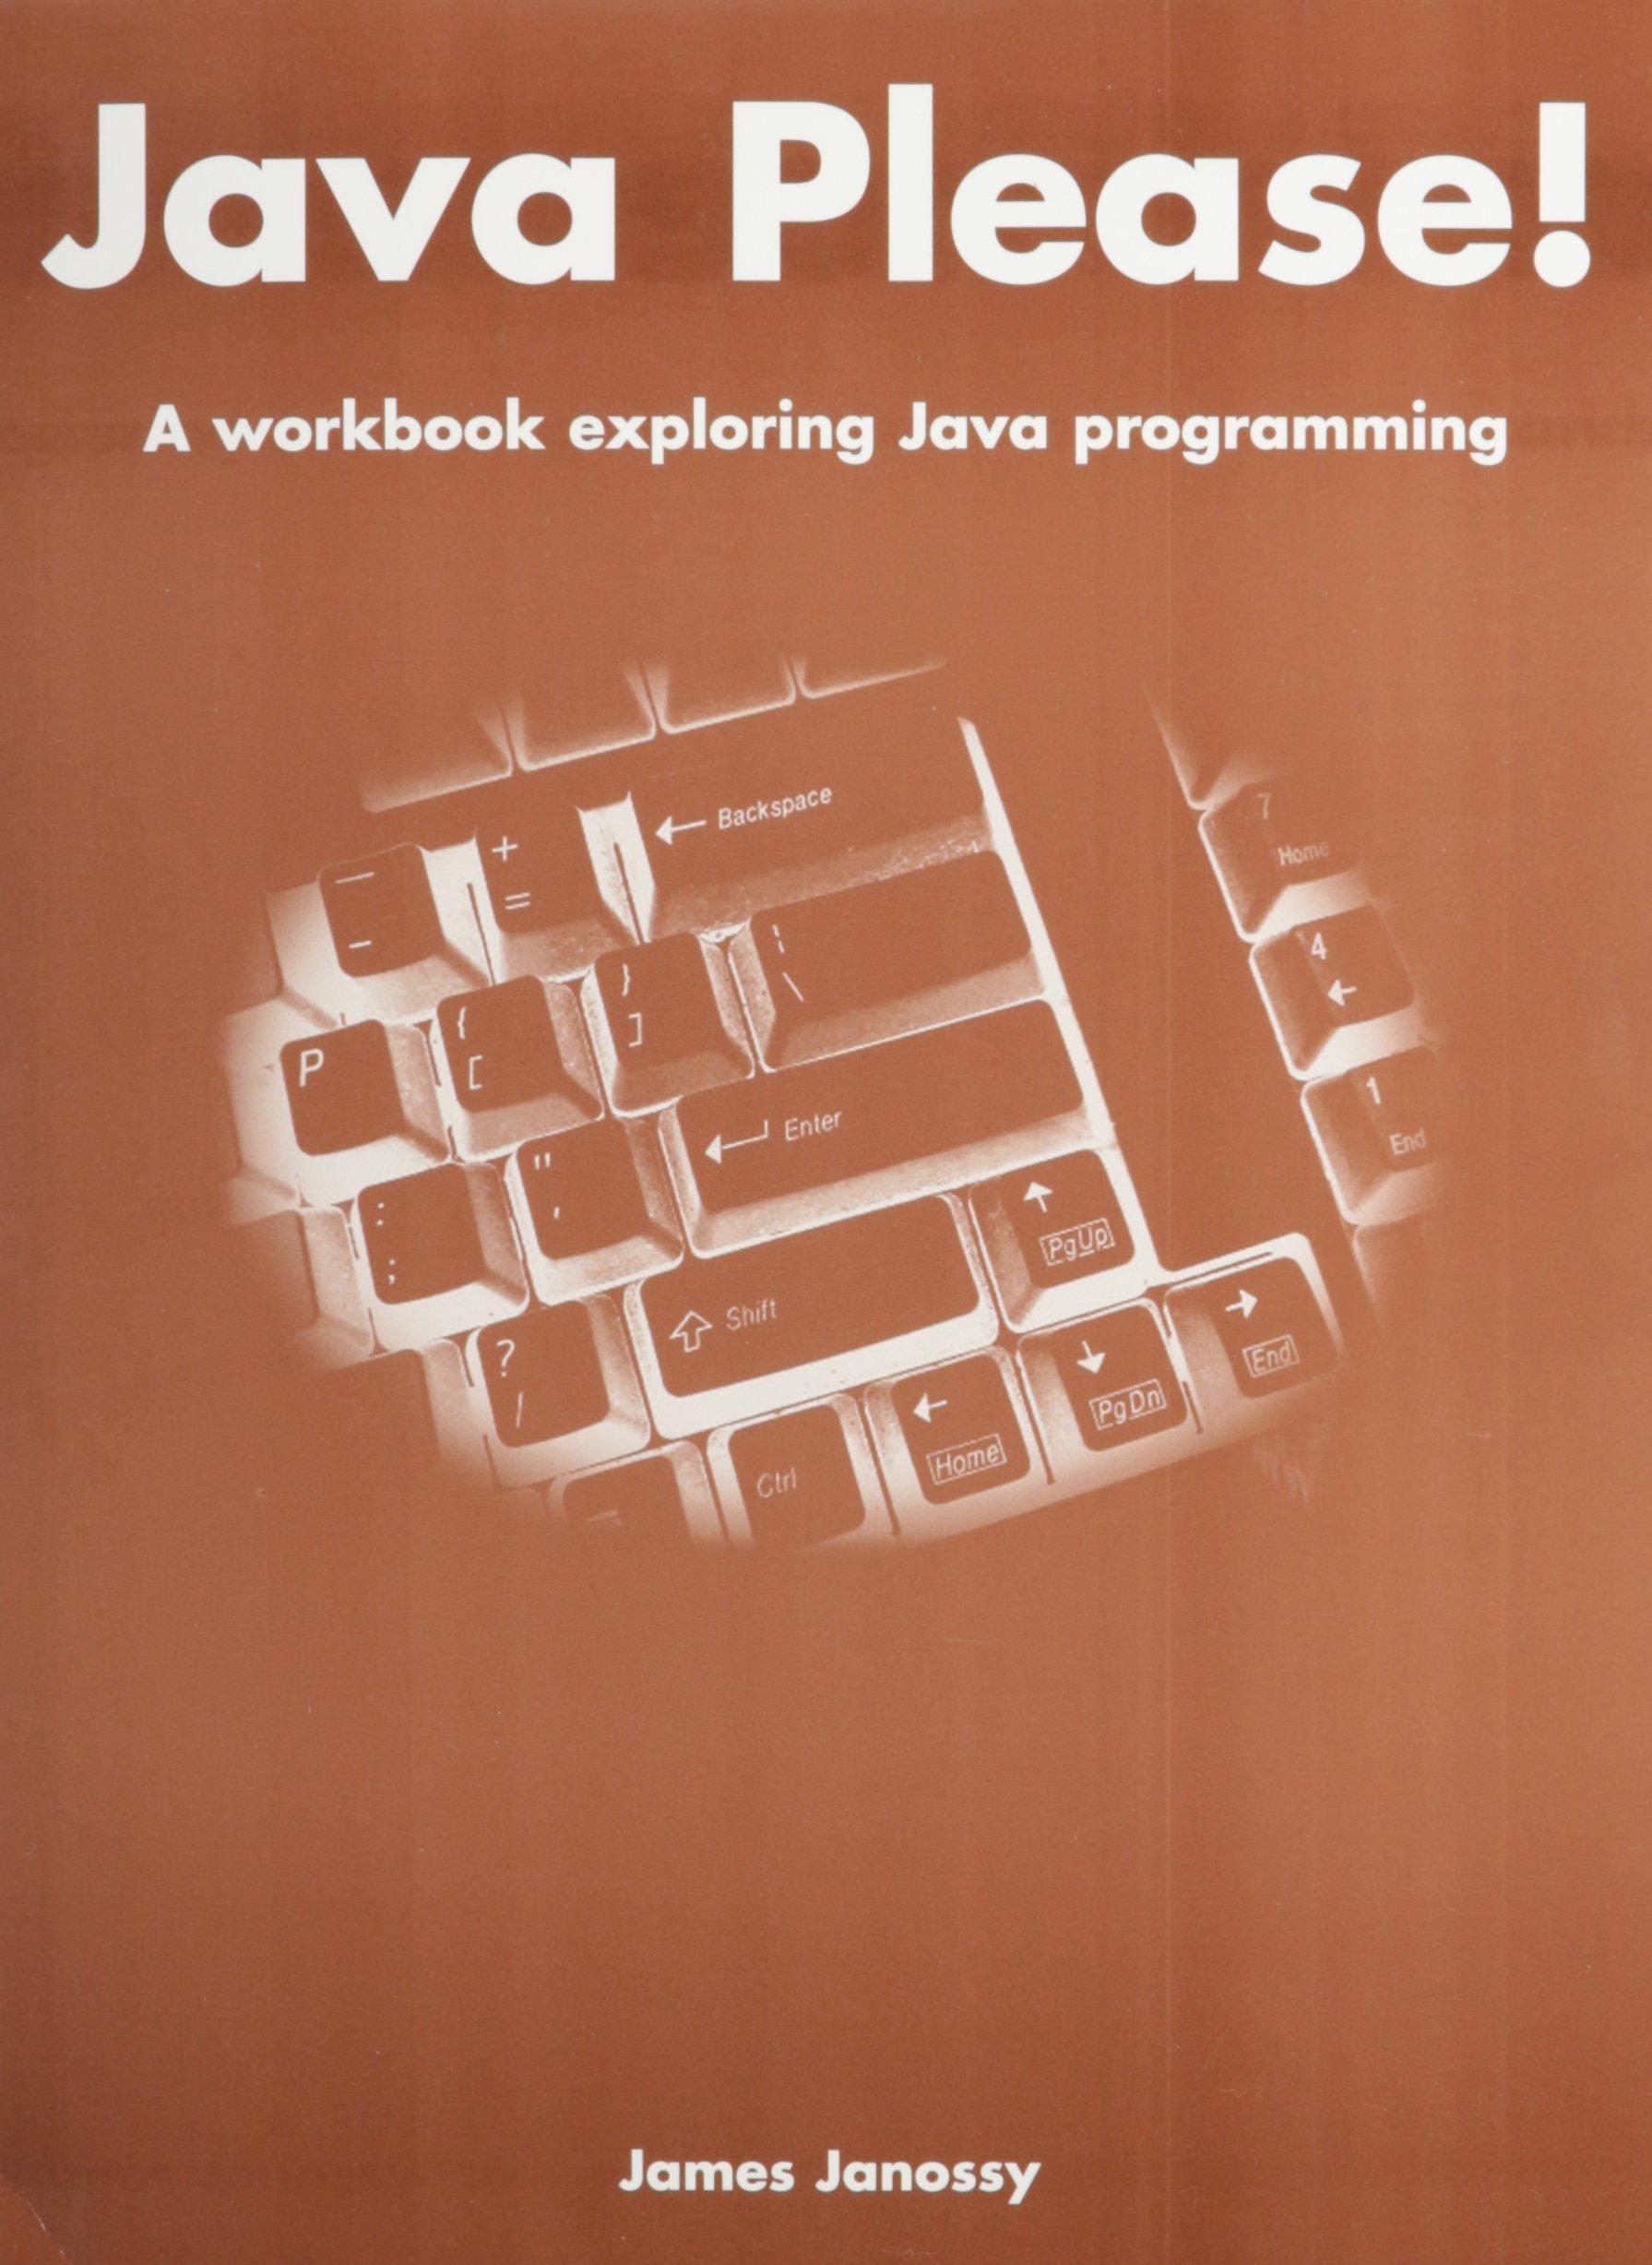 java please a workbook exploring java programming 1st edition james janossy 1588743349, 978-1588743343